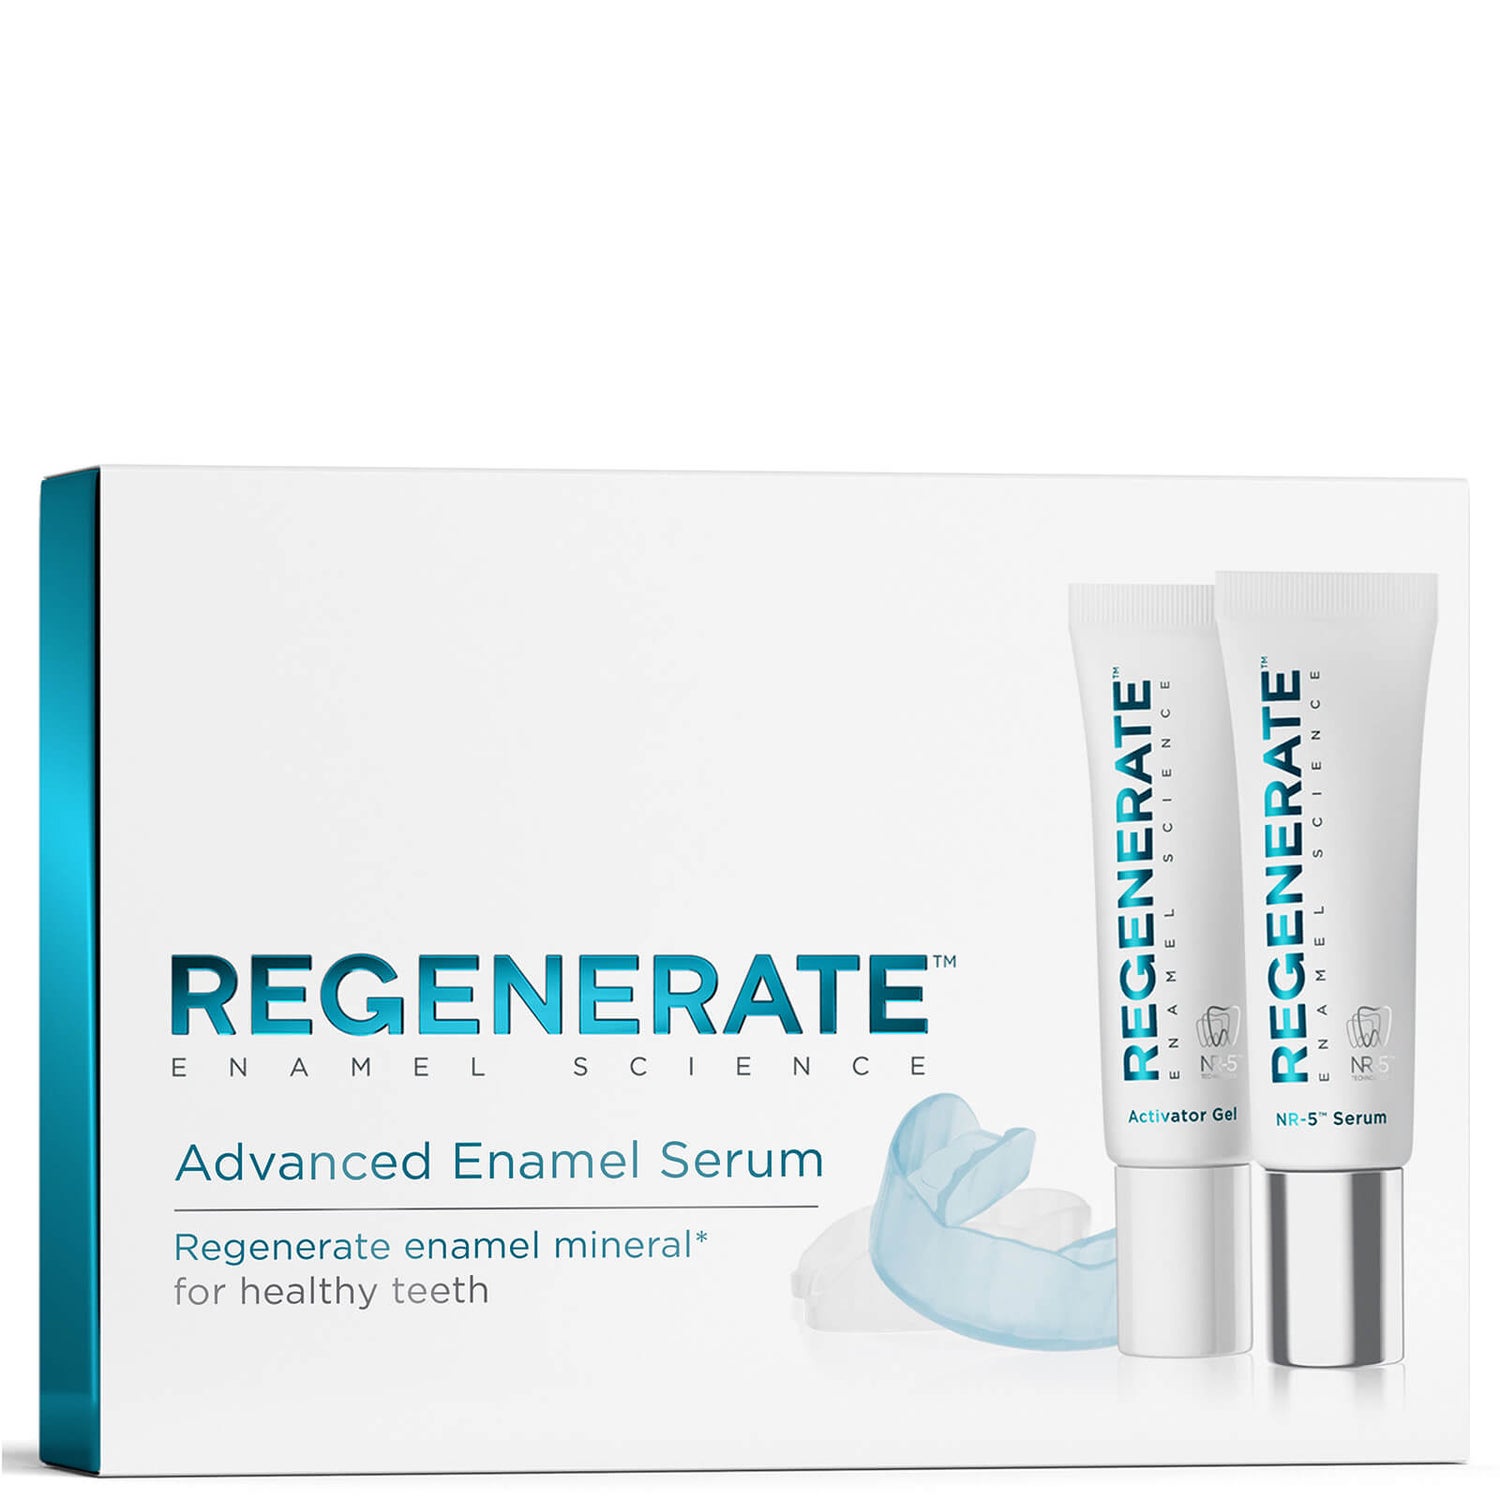 Regenerate Advanced Enamel Serum Kit (2 x 16ml)